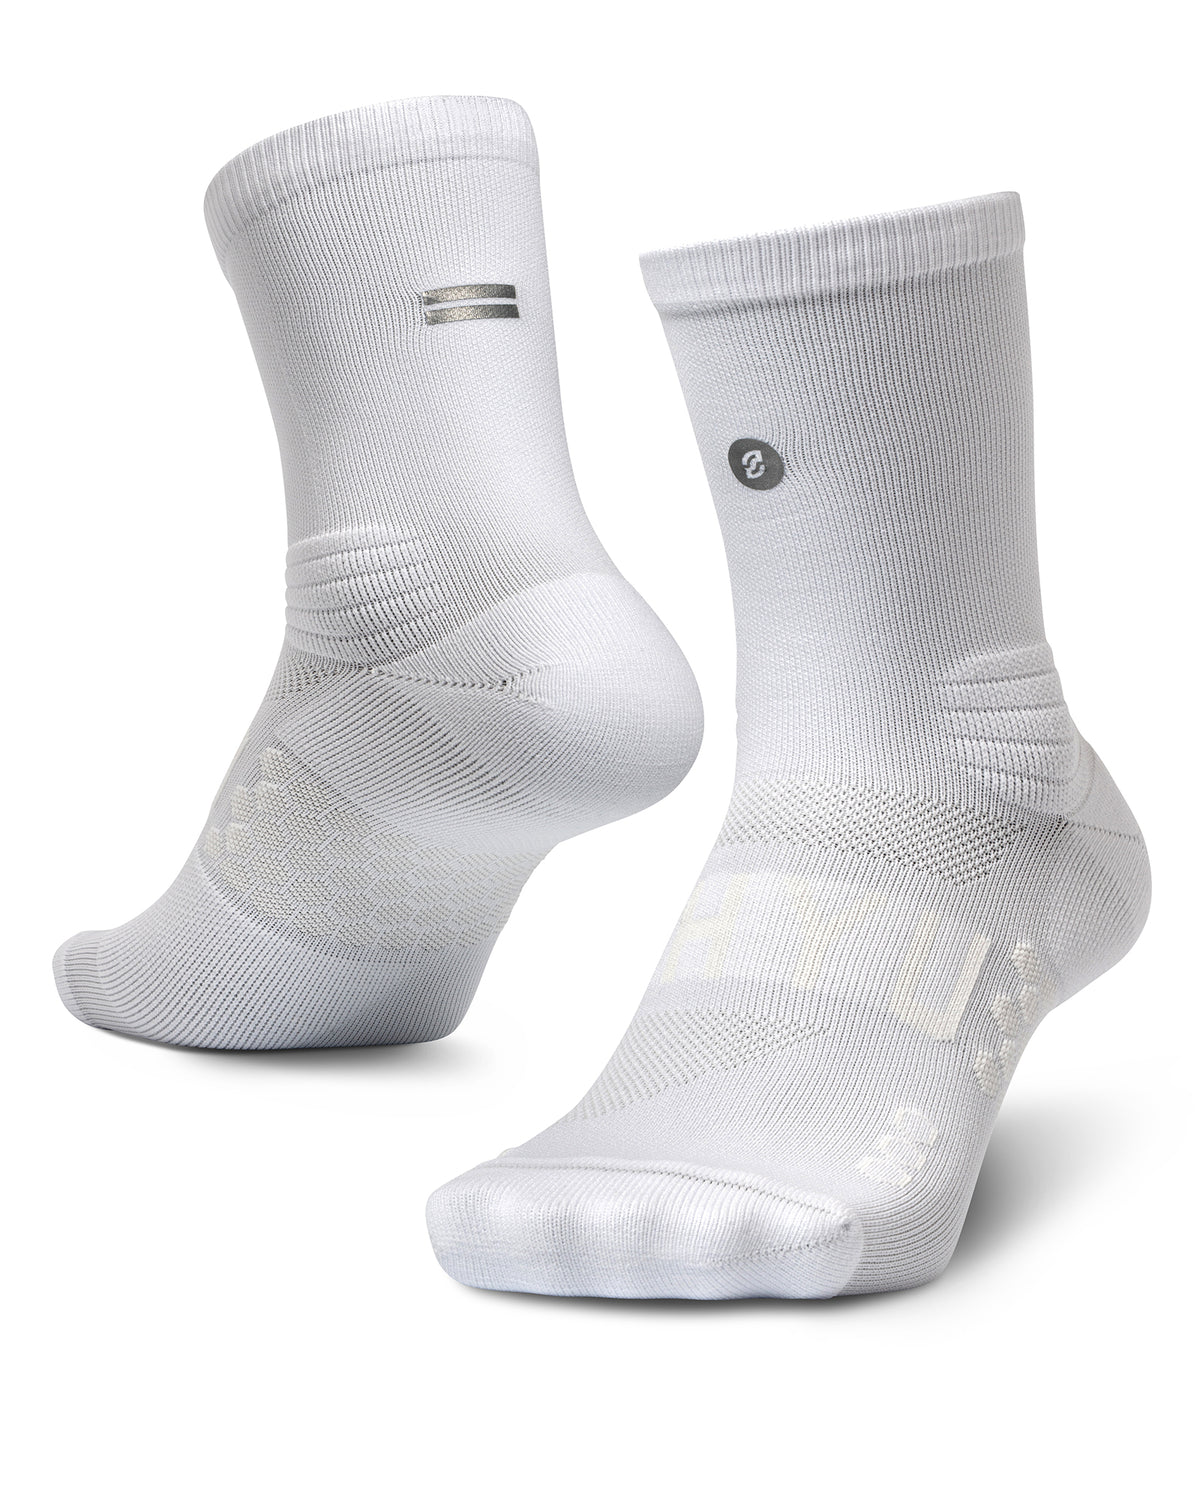 SHYU racing socks - white | white | white